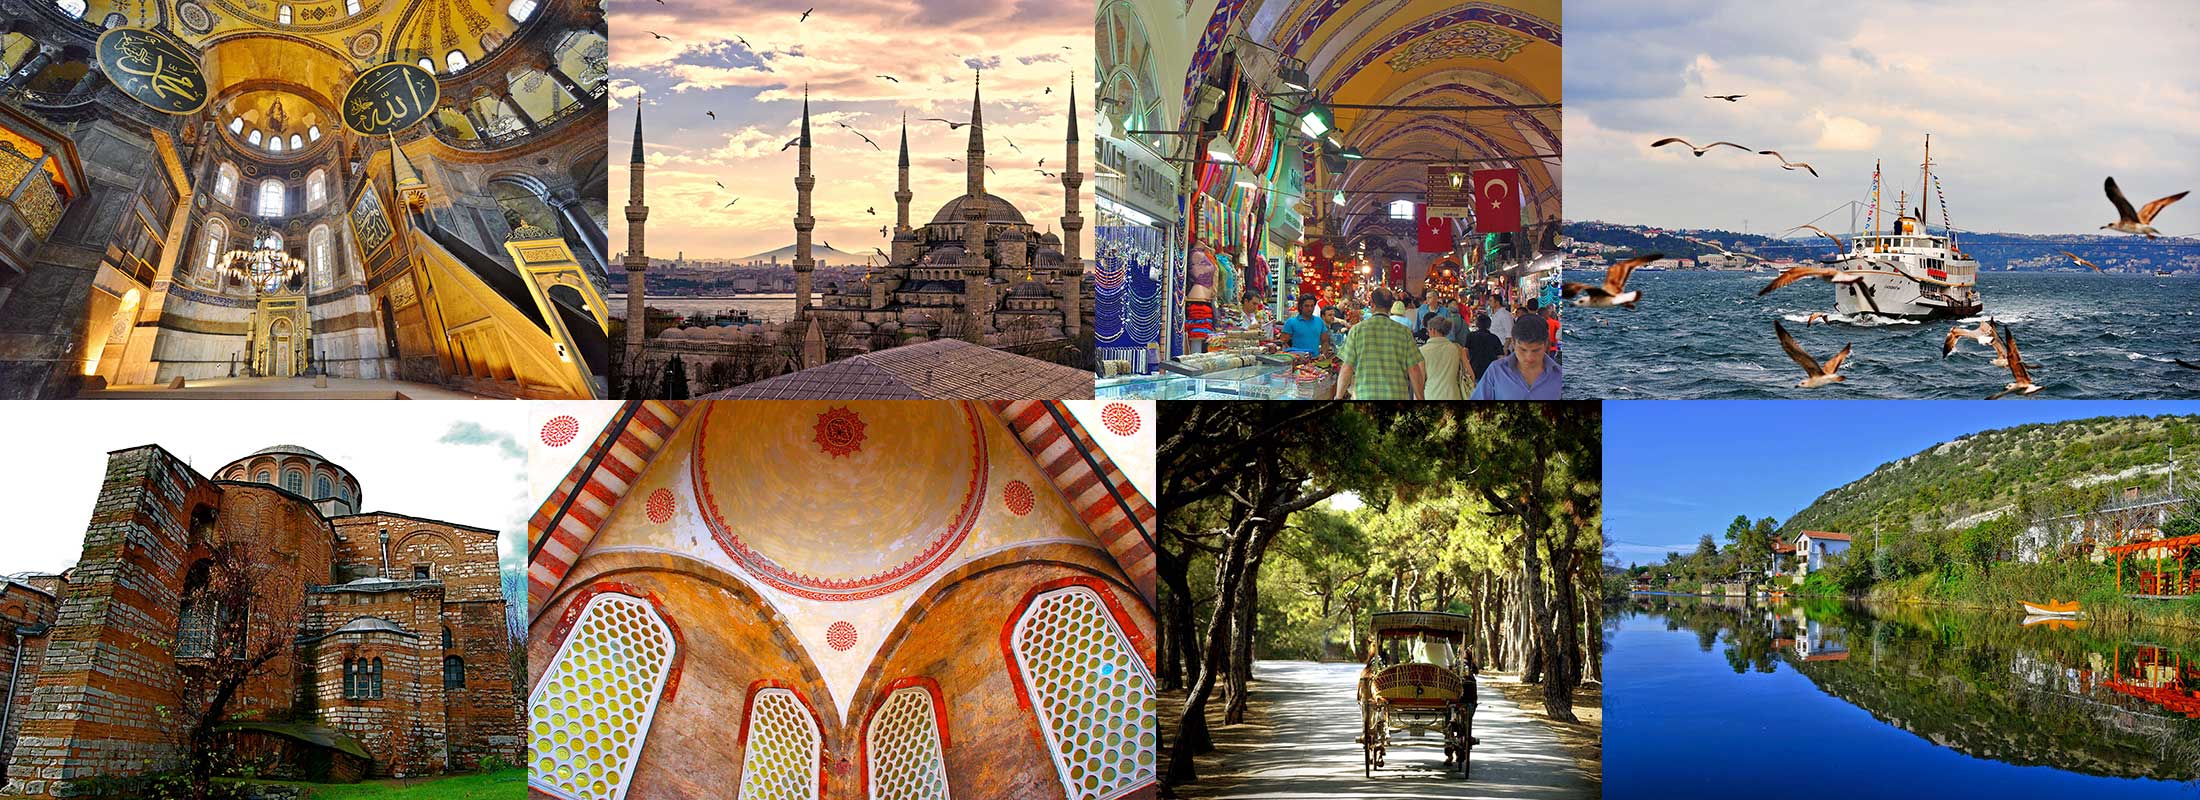 istanbul-tours-hagia-sophia-museum-blue-mosque-grand-bazaar-bosphorus-cruise-chora-church-topkapi-palace-princes-islands-agva